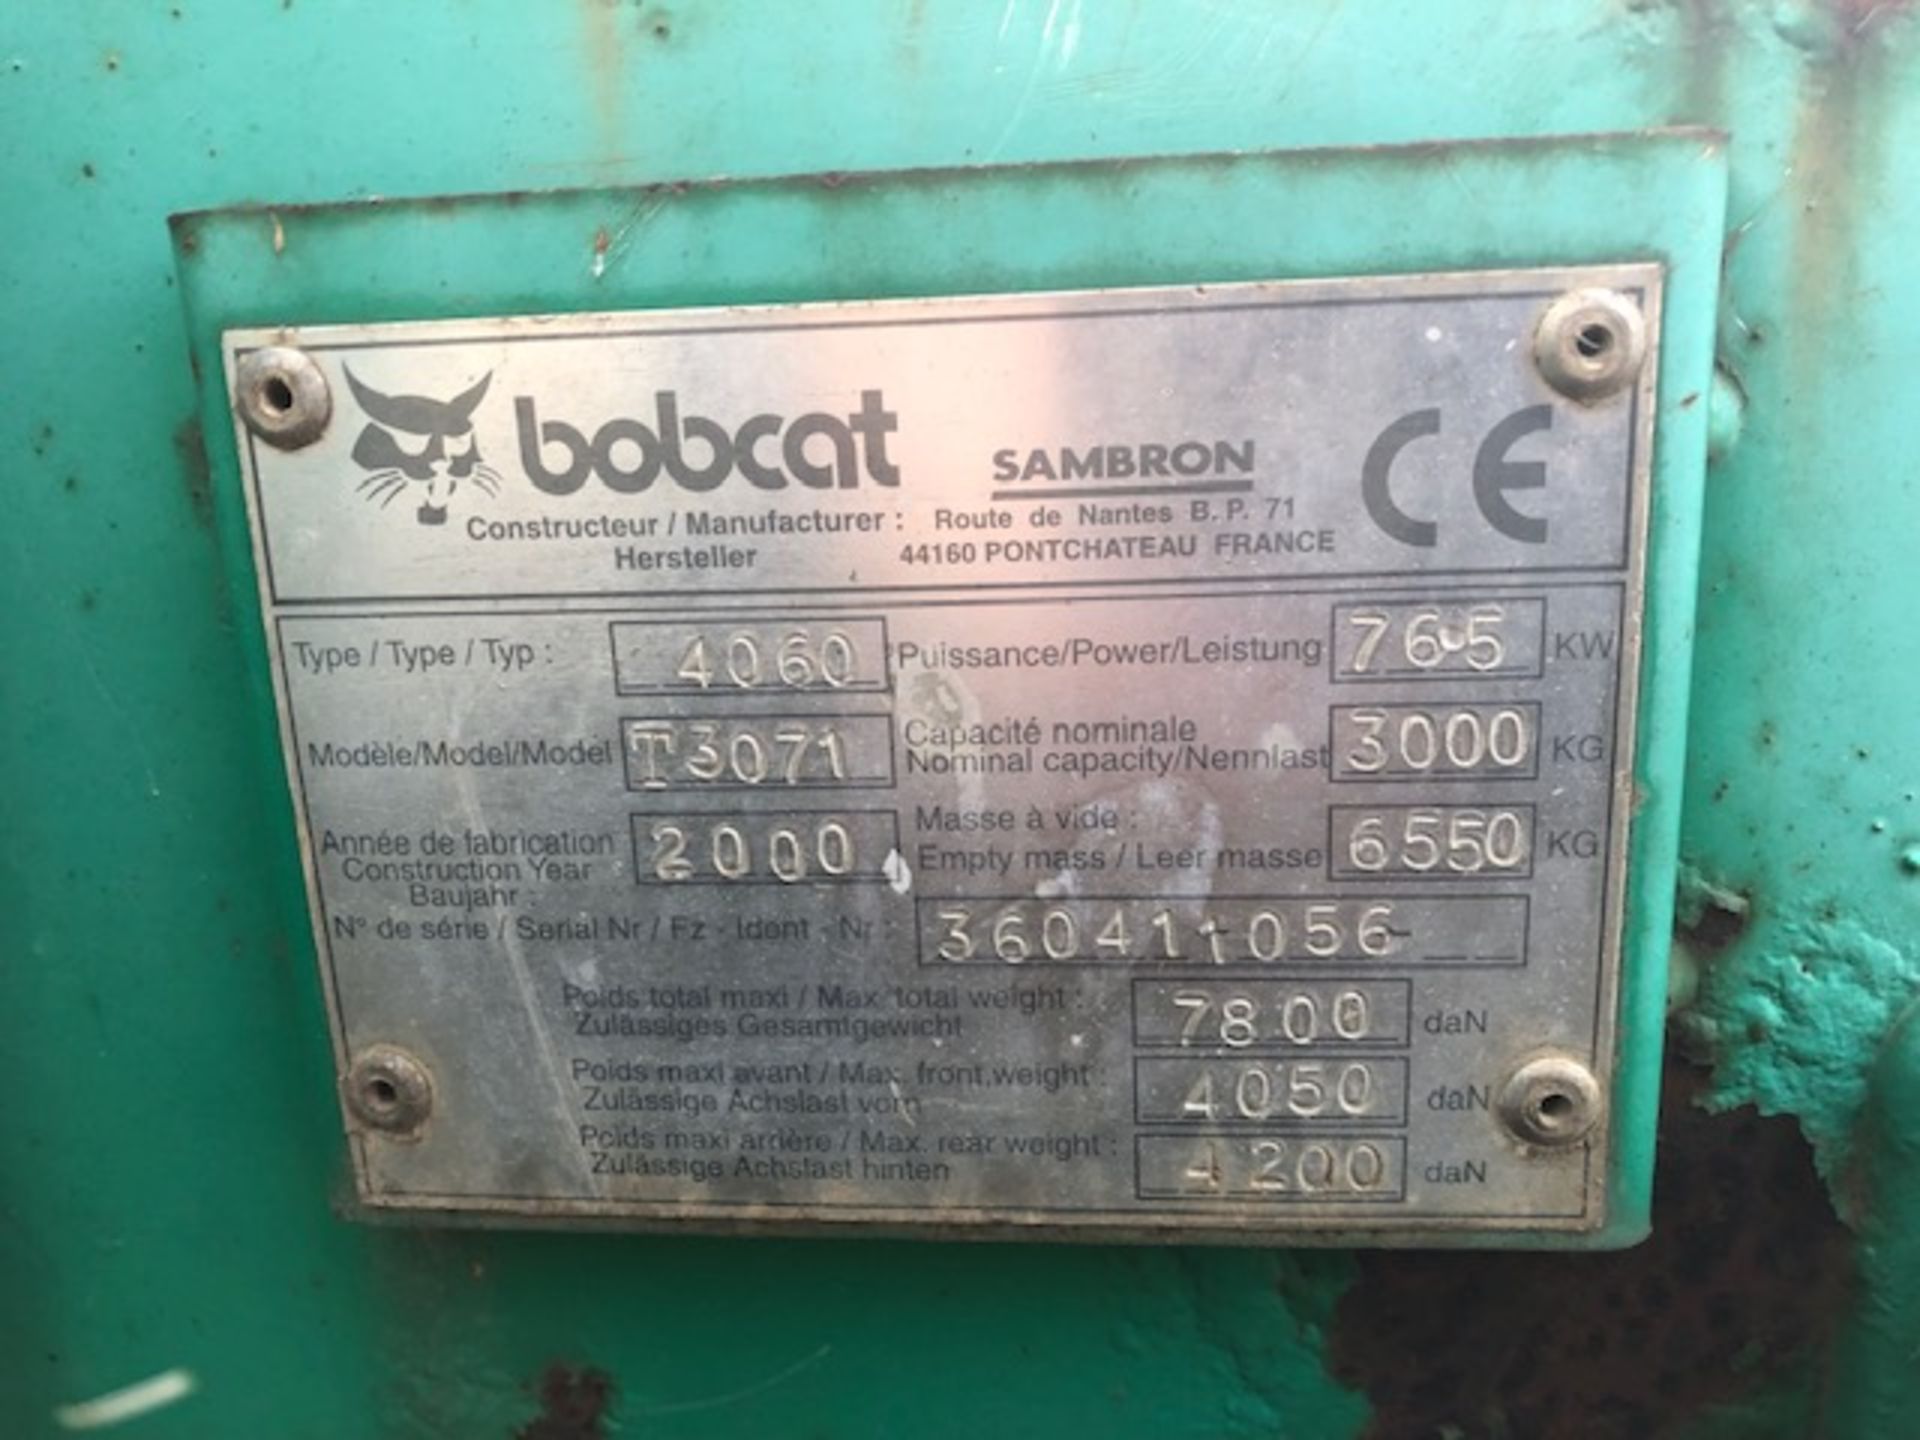 BOBCAT T3071 Plant Diesel - VIN: 360411056 - Year: 2000 - 3,121 Hours - Telrhandler, R.D.L LOCATED - Image 7 of 7